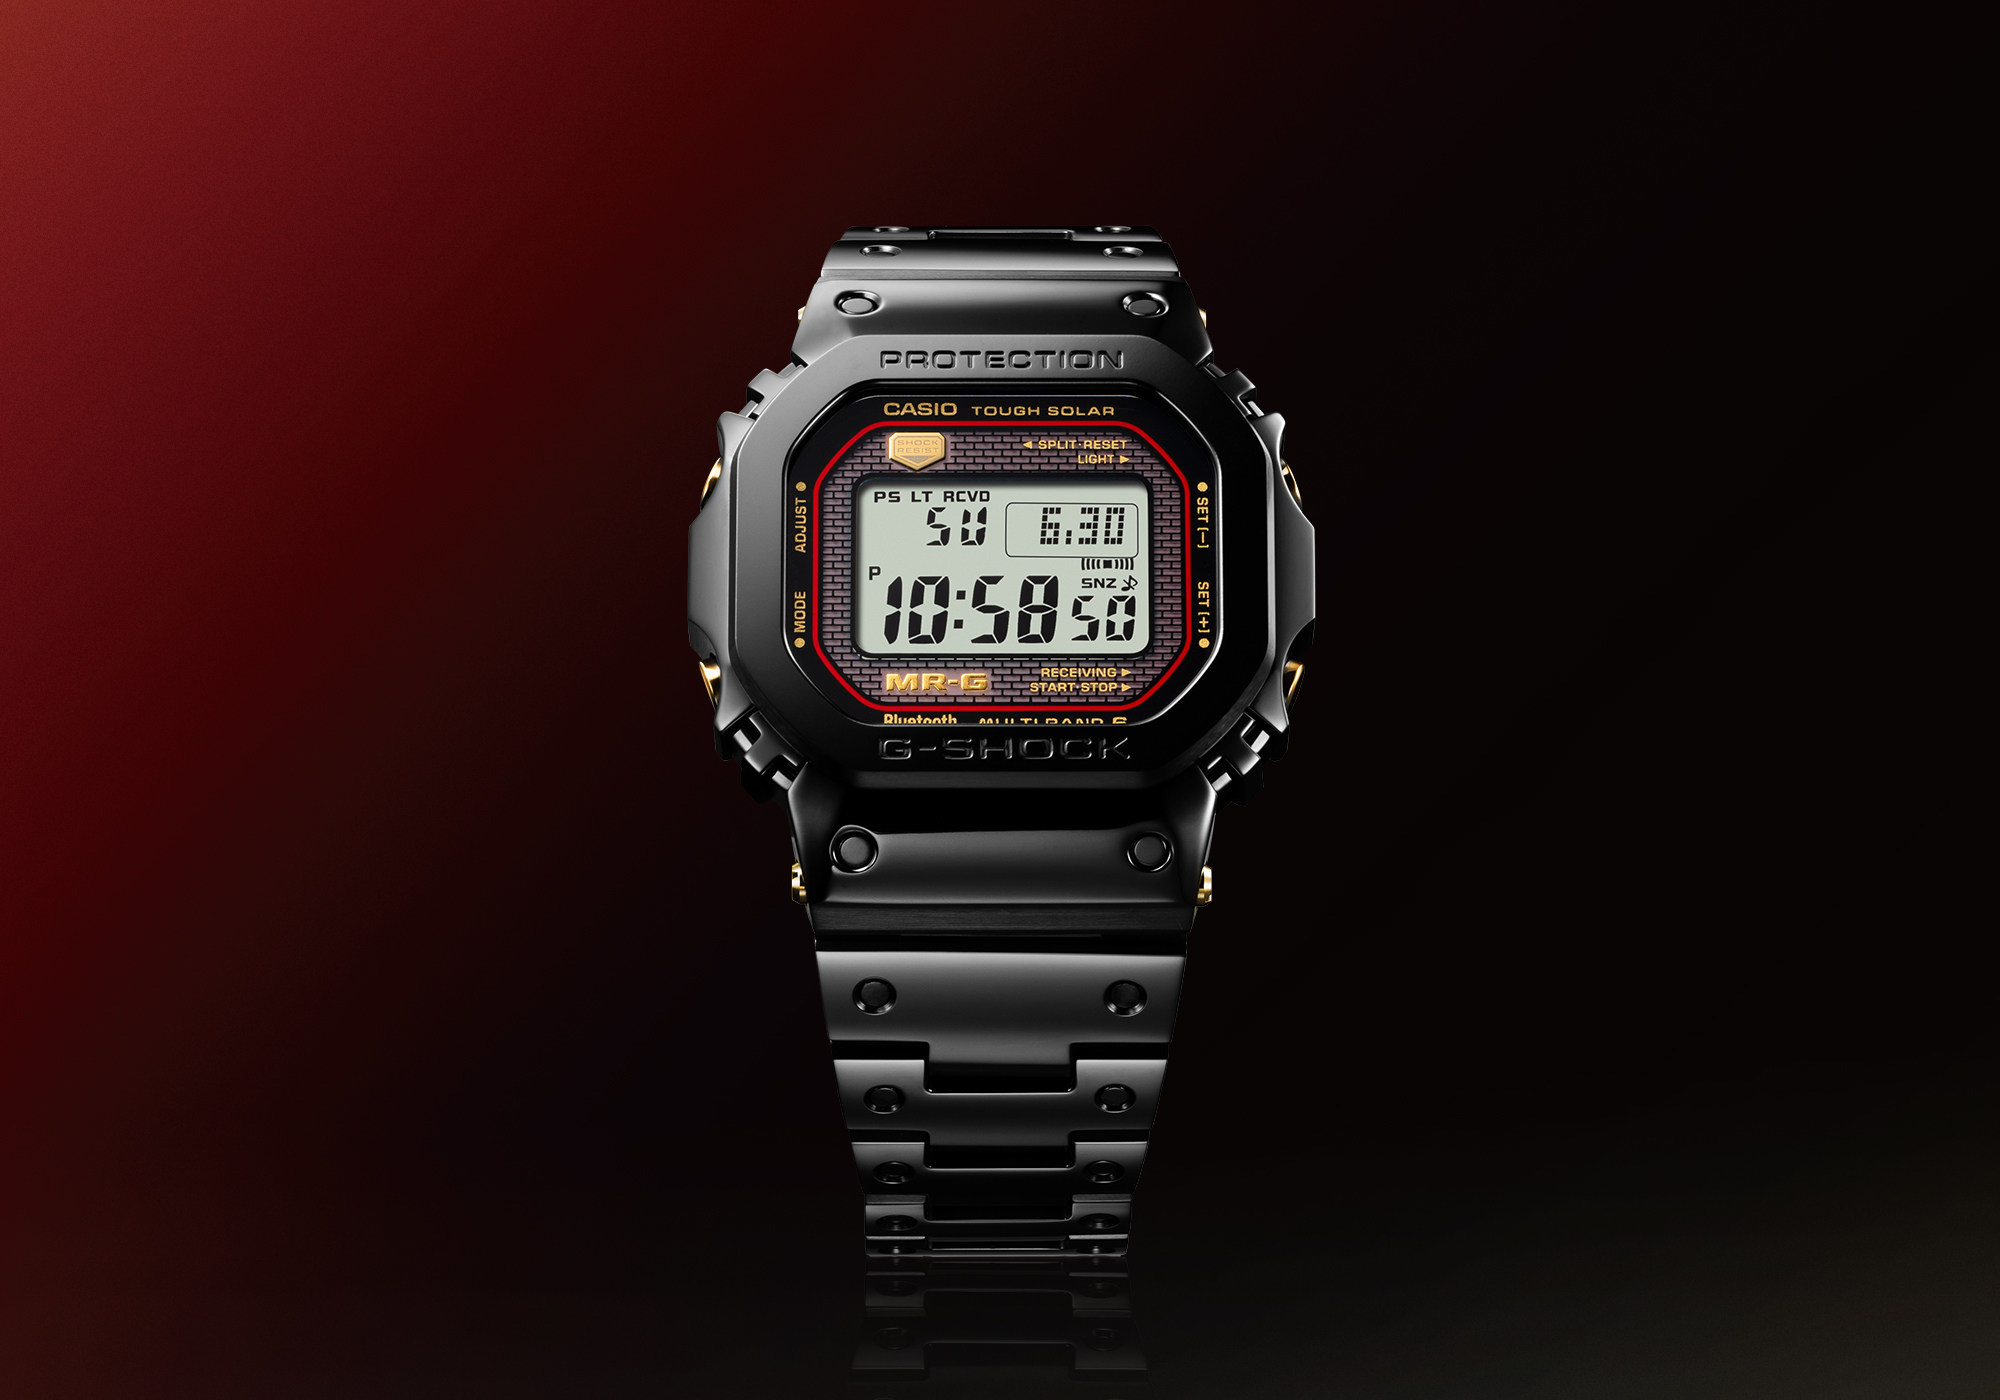 Barrio tramo fondo G-SHOCK unveils $4,000 MR-G watch in the style of its original DW-5000C